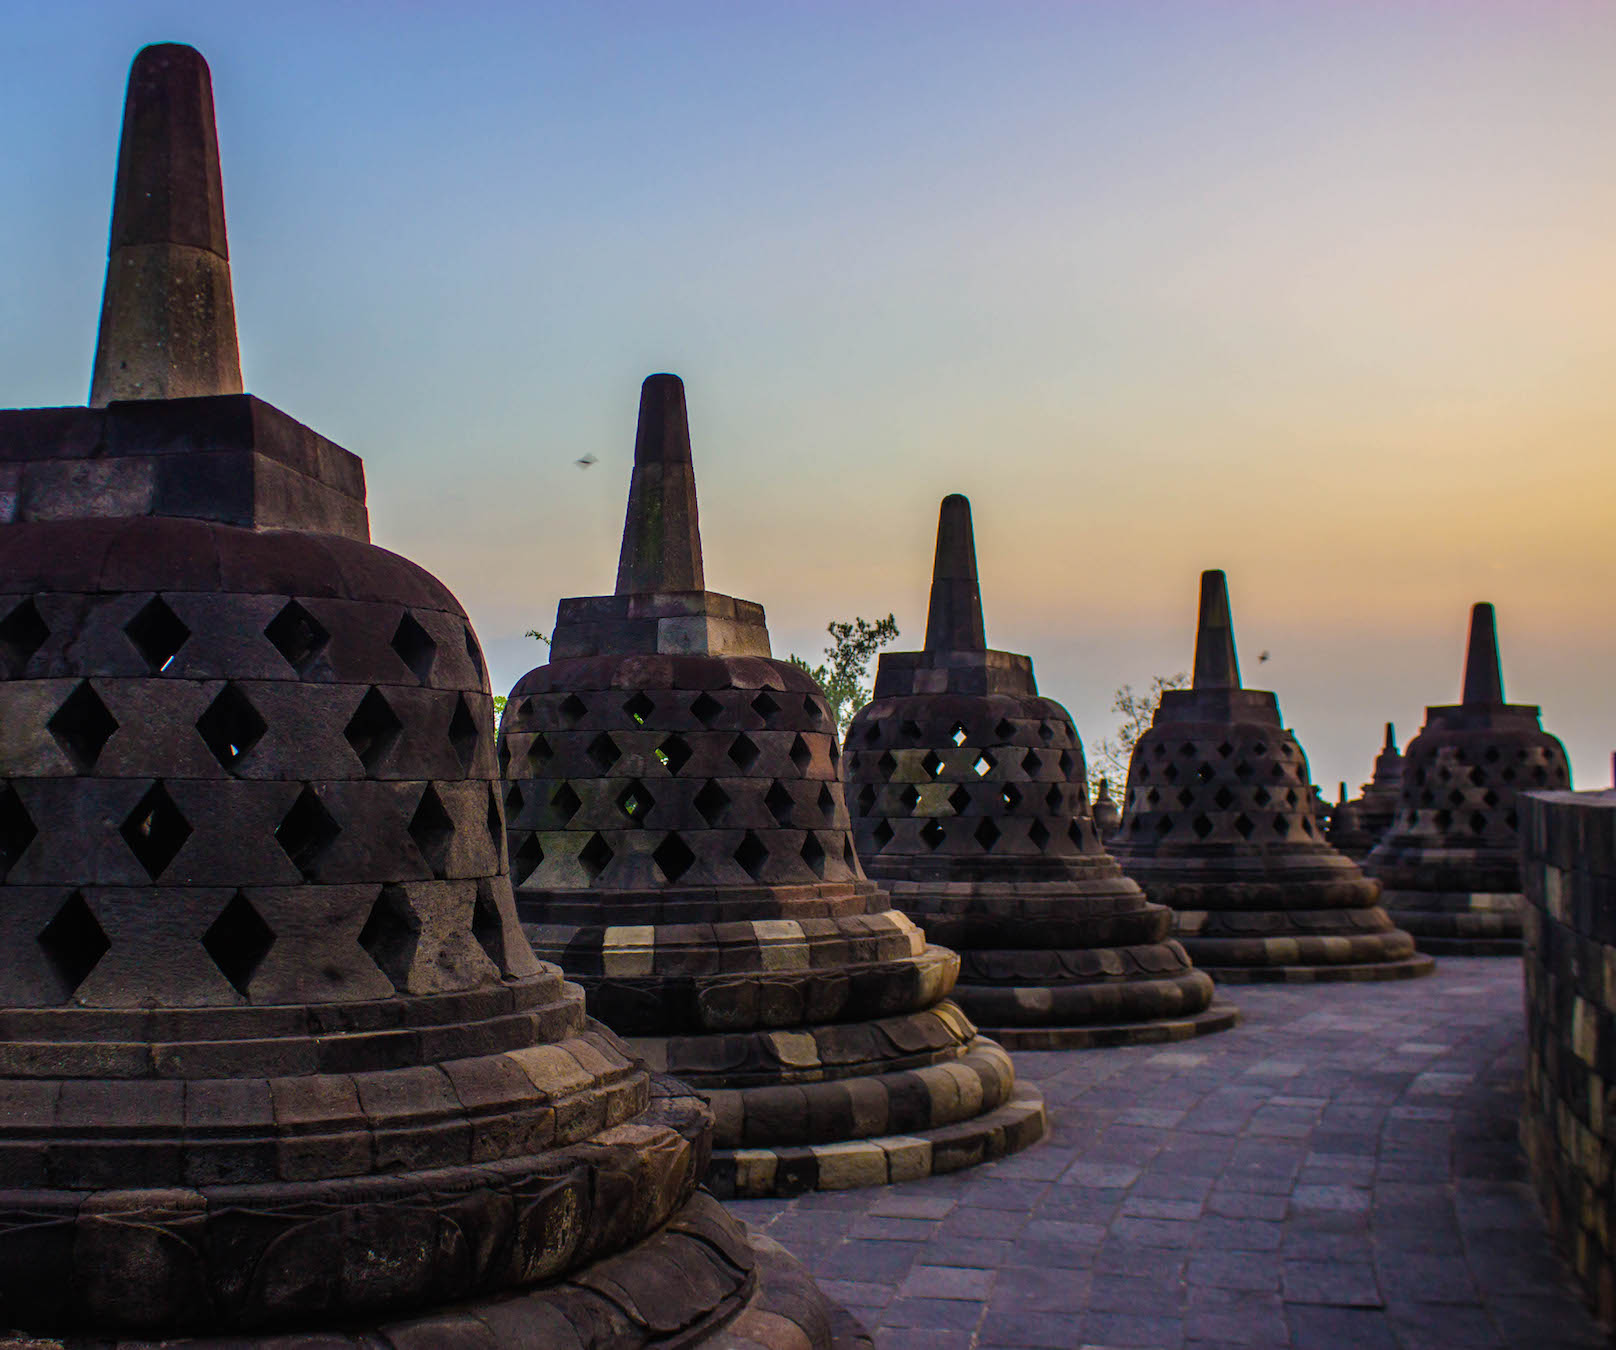 Row of stupas at Borobudur, Indonesia